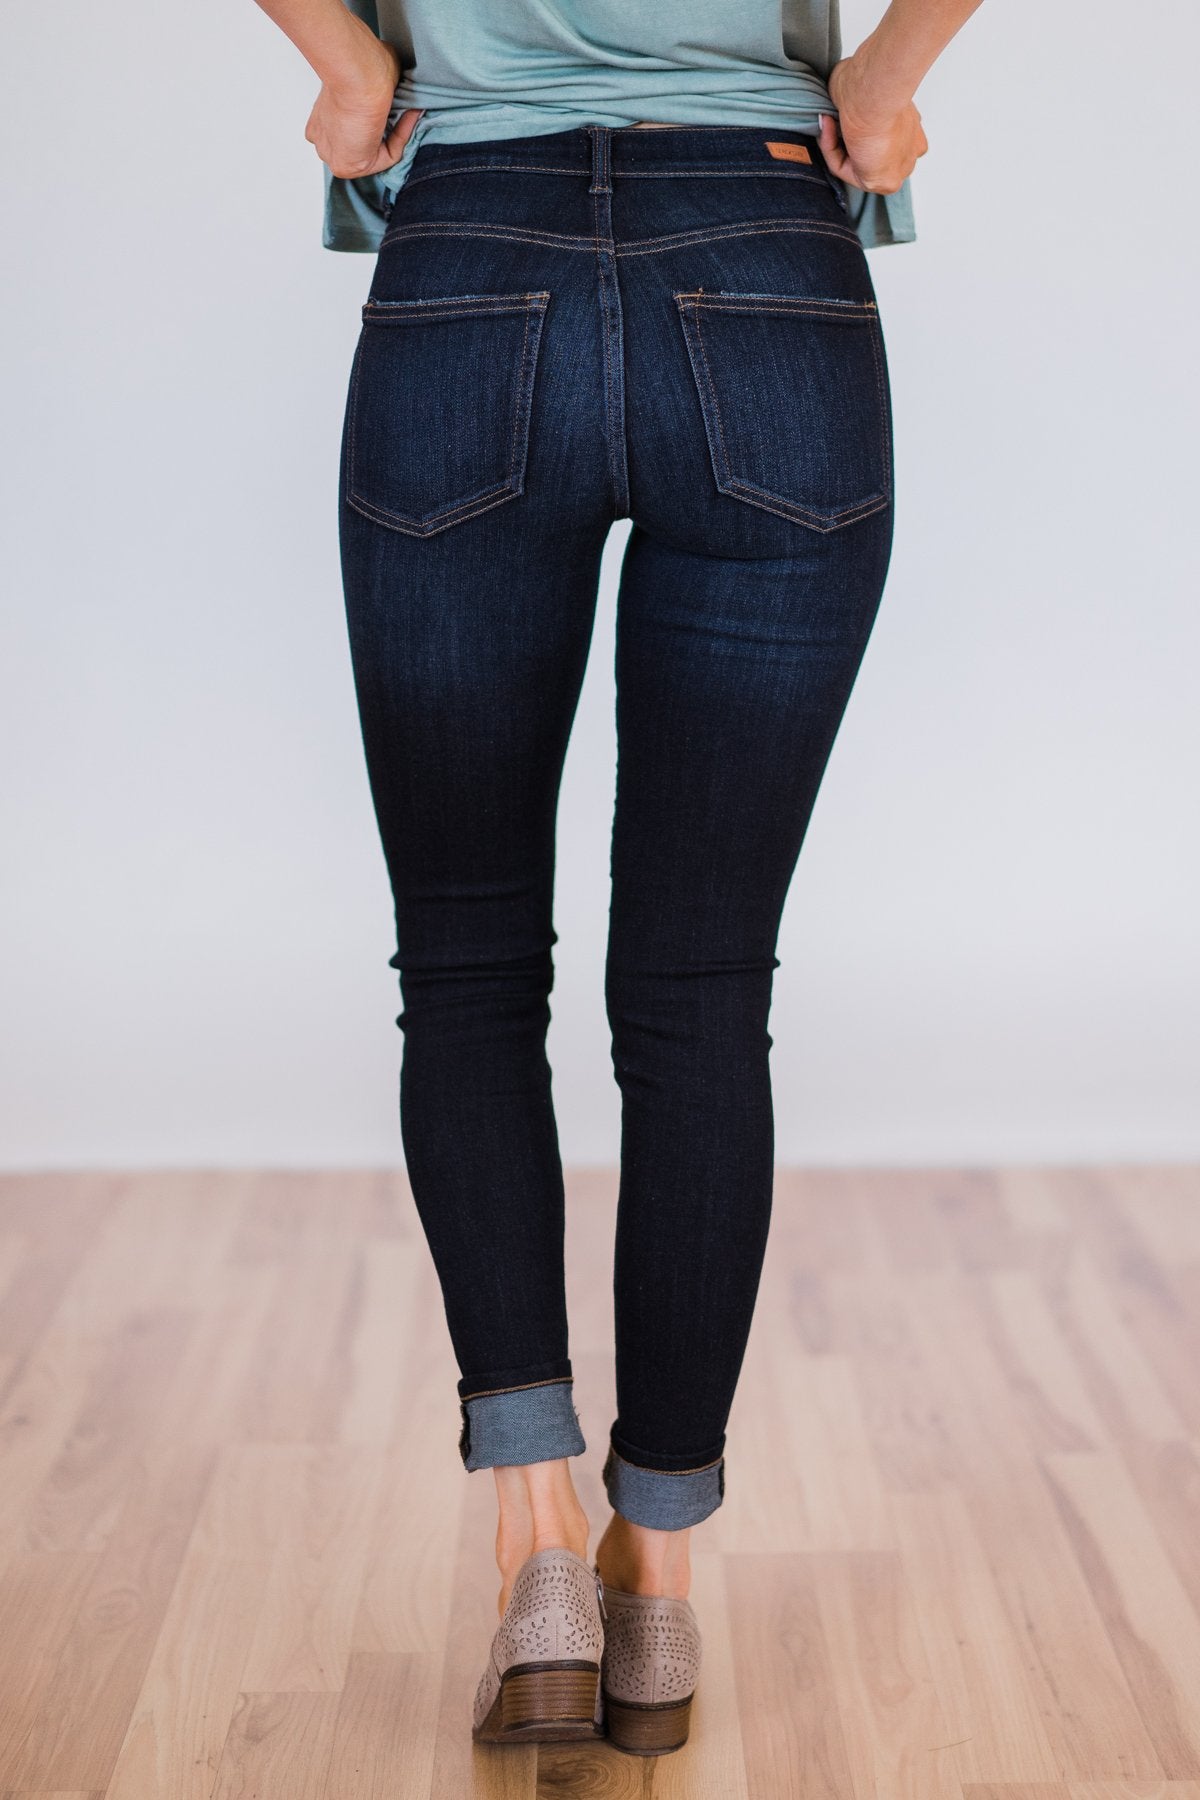 sneak peek jeans high rise